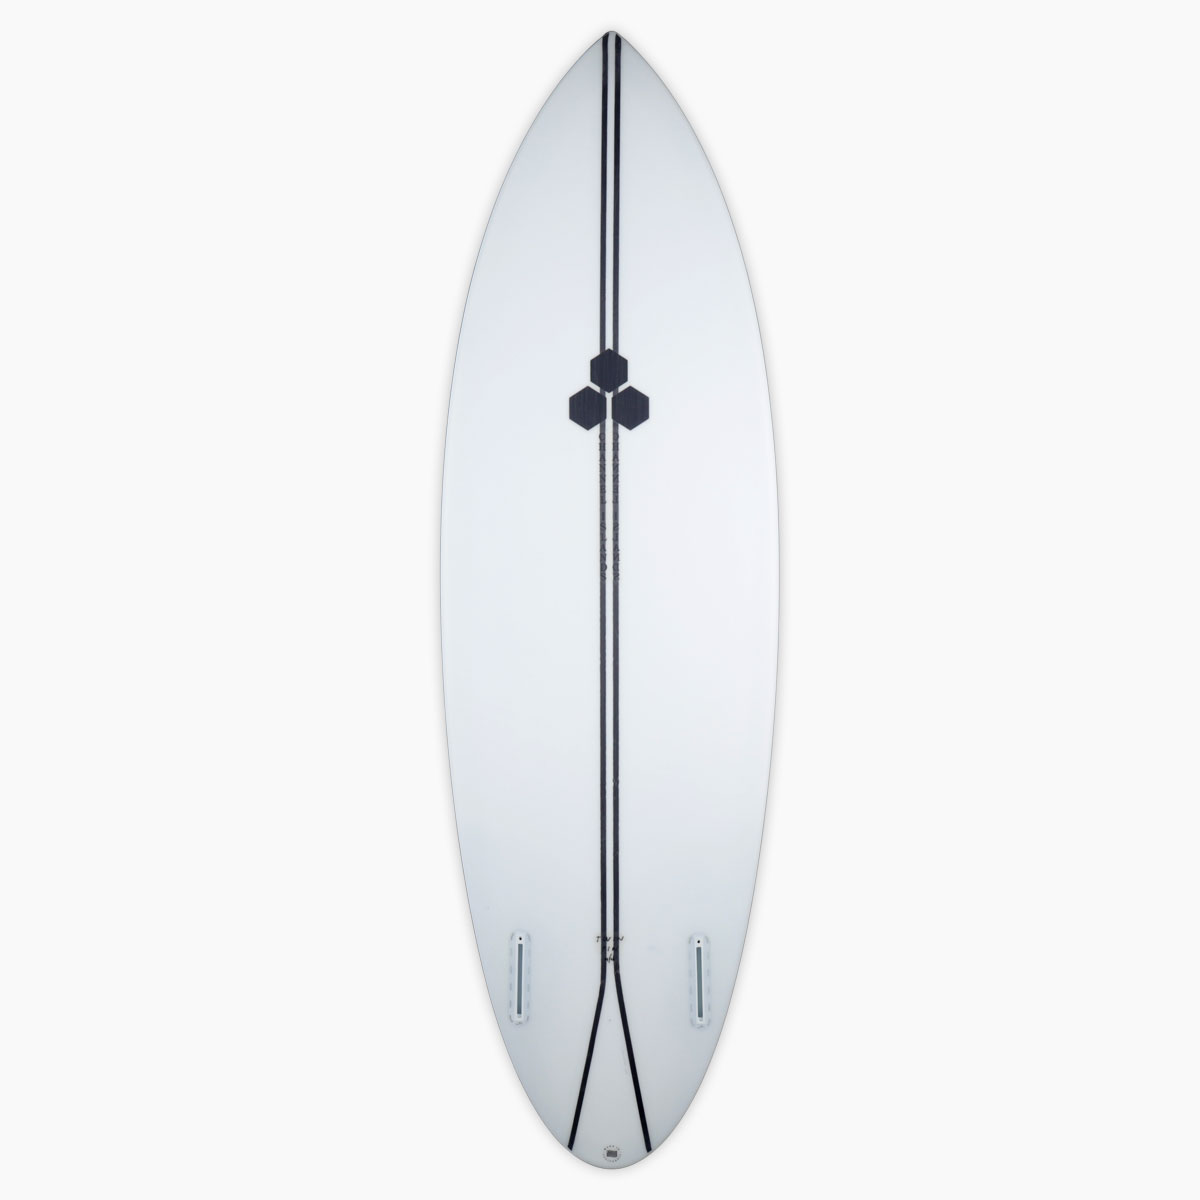 SurfBoardNet / ブランド:CHANNEL ISLANDS モデル:TWIN PIN SPINE-TEK